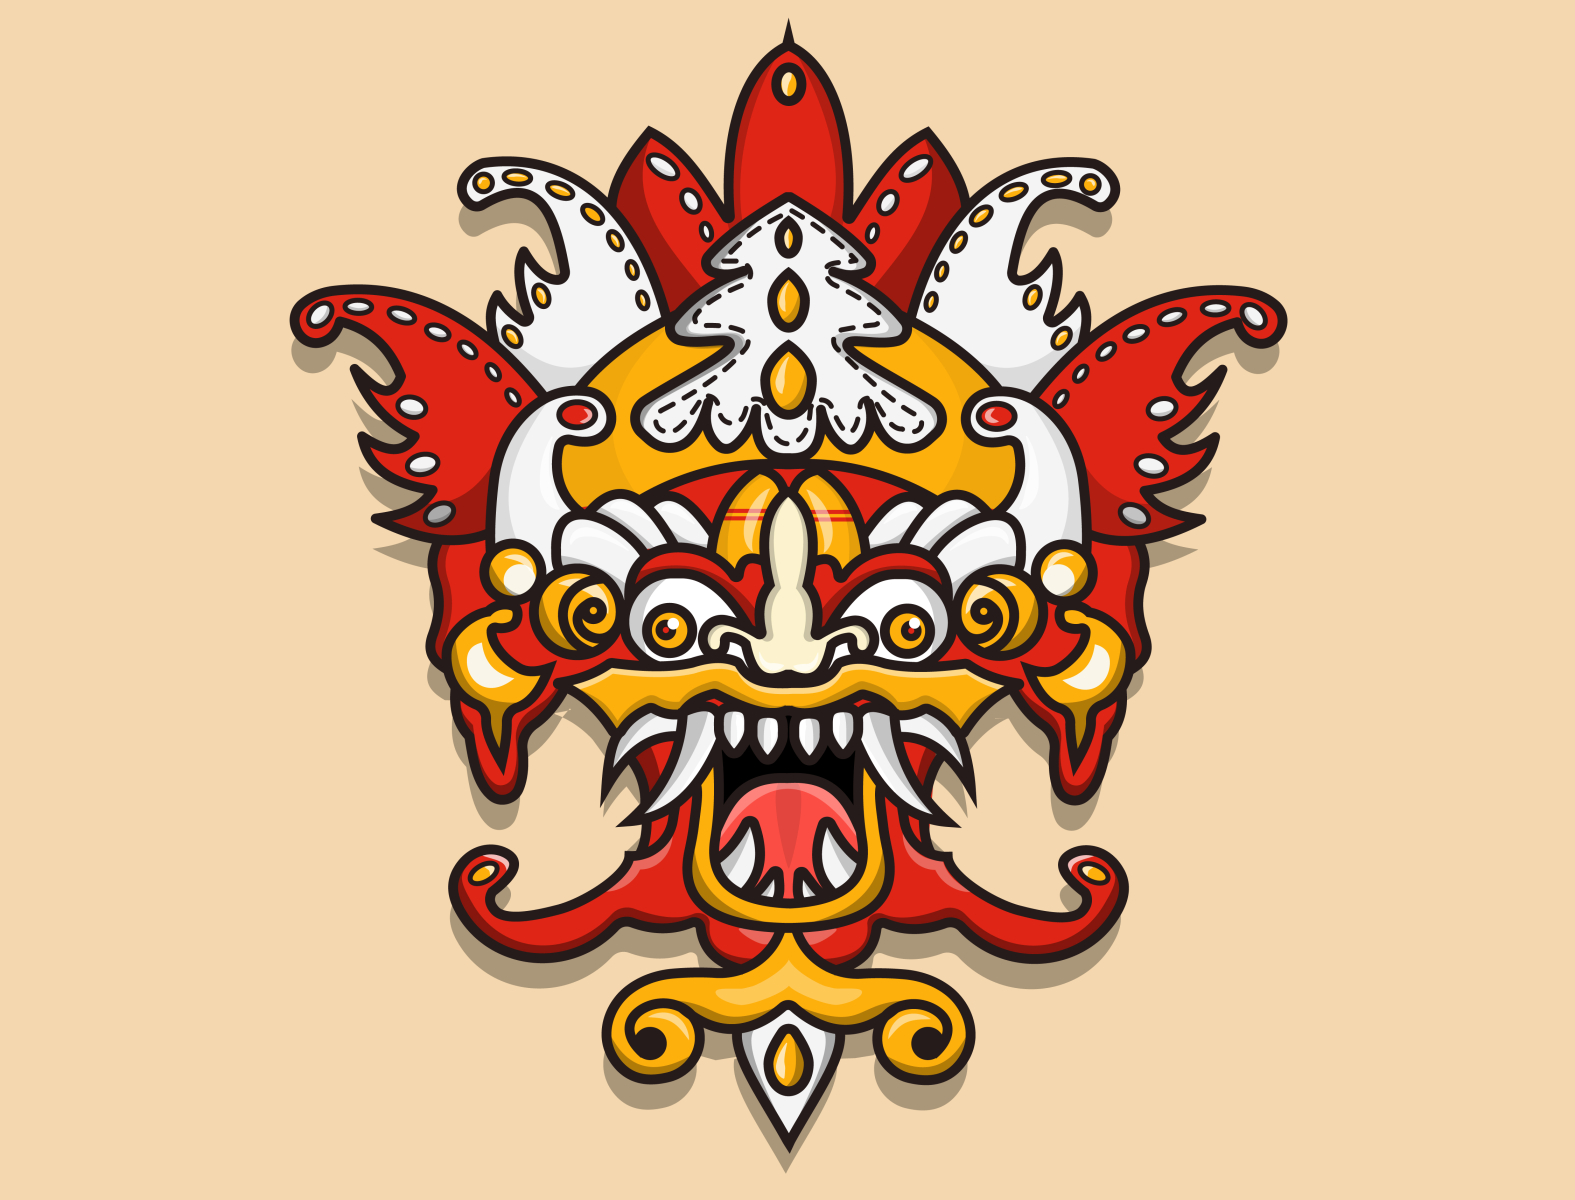 Balinese Mask #1 by Ayushi Aggarwal on Dribbble